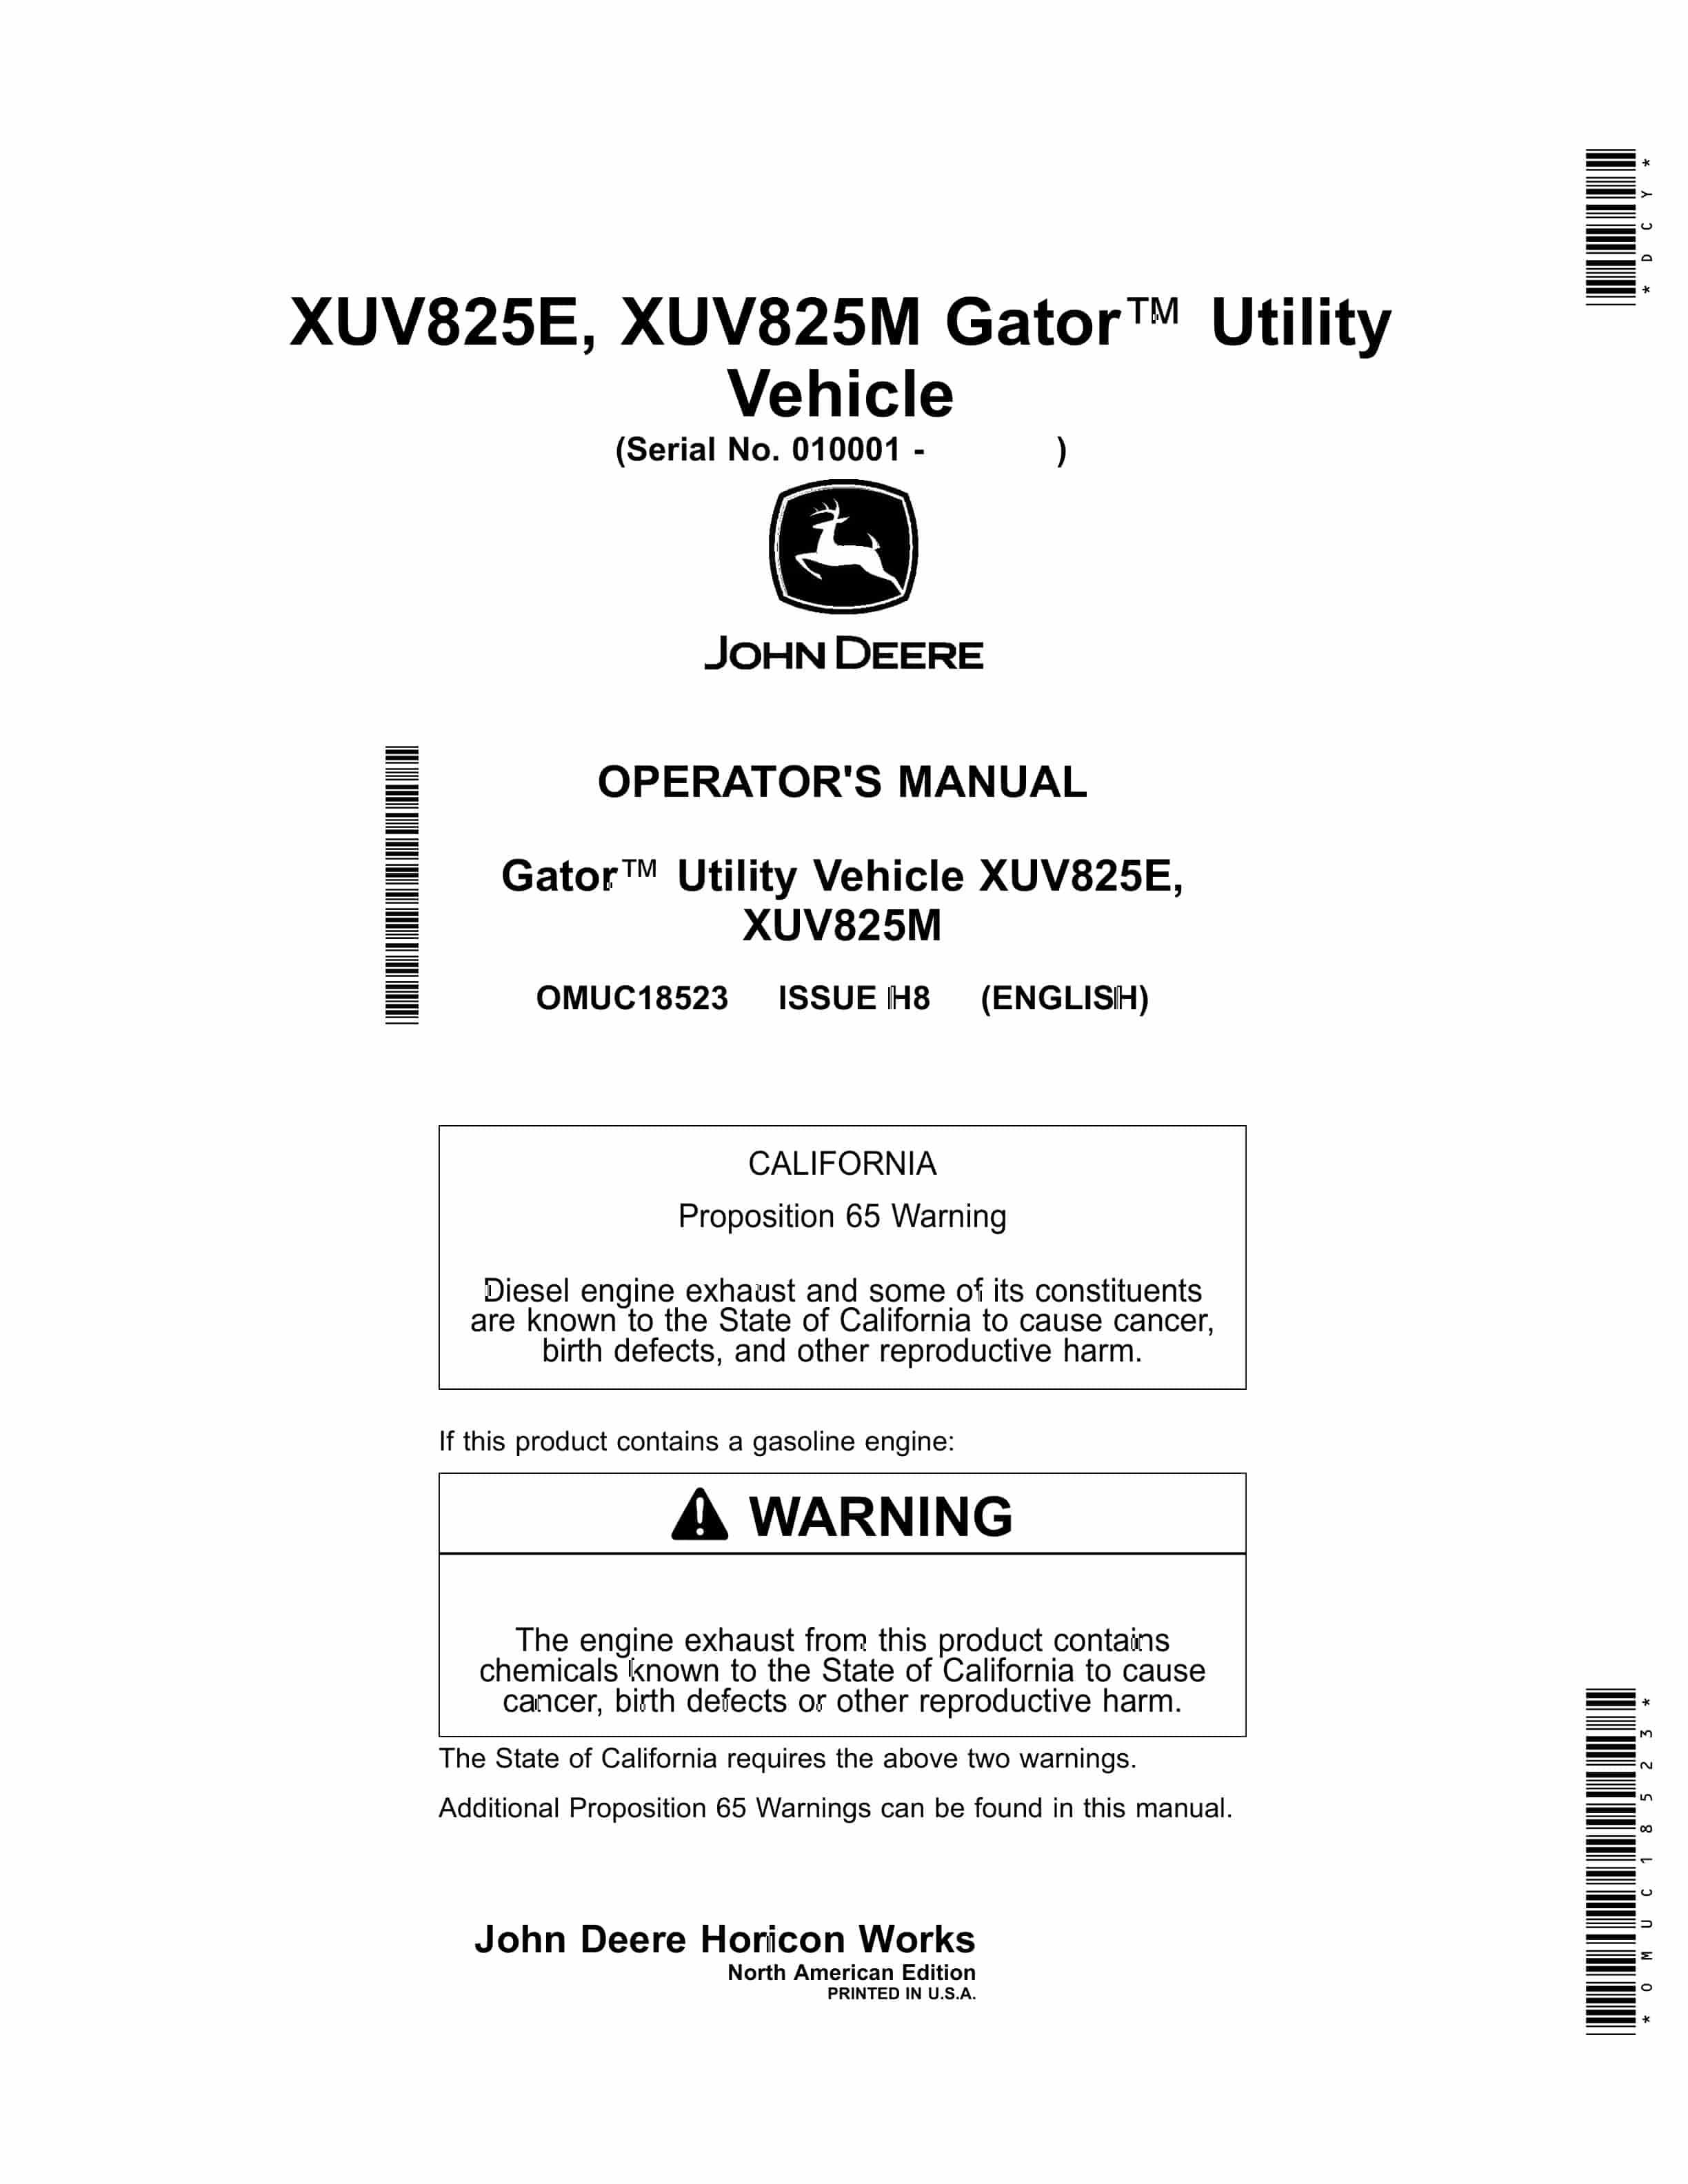 John Deere XUV825E XUV825M Gator Utility Vehicles Operator Manual OMUC18523 1